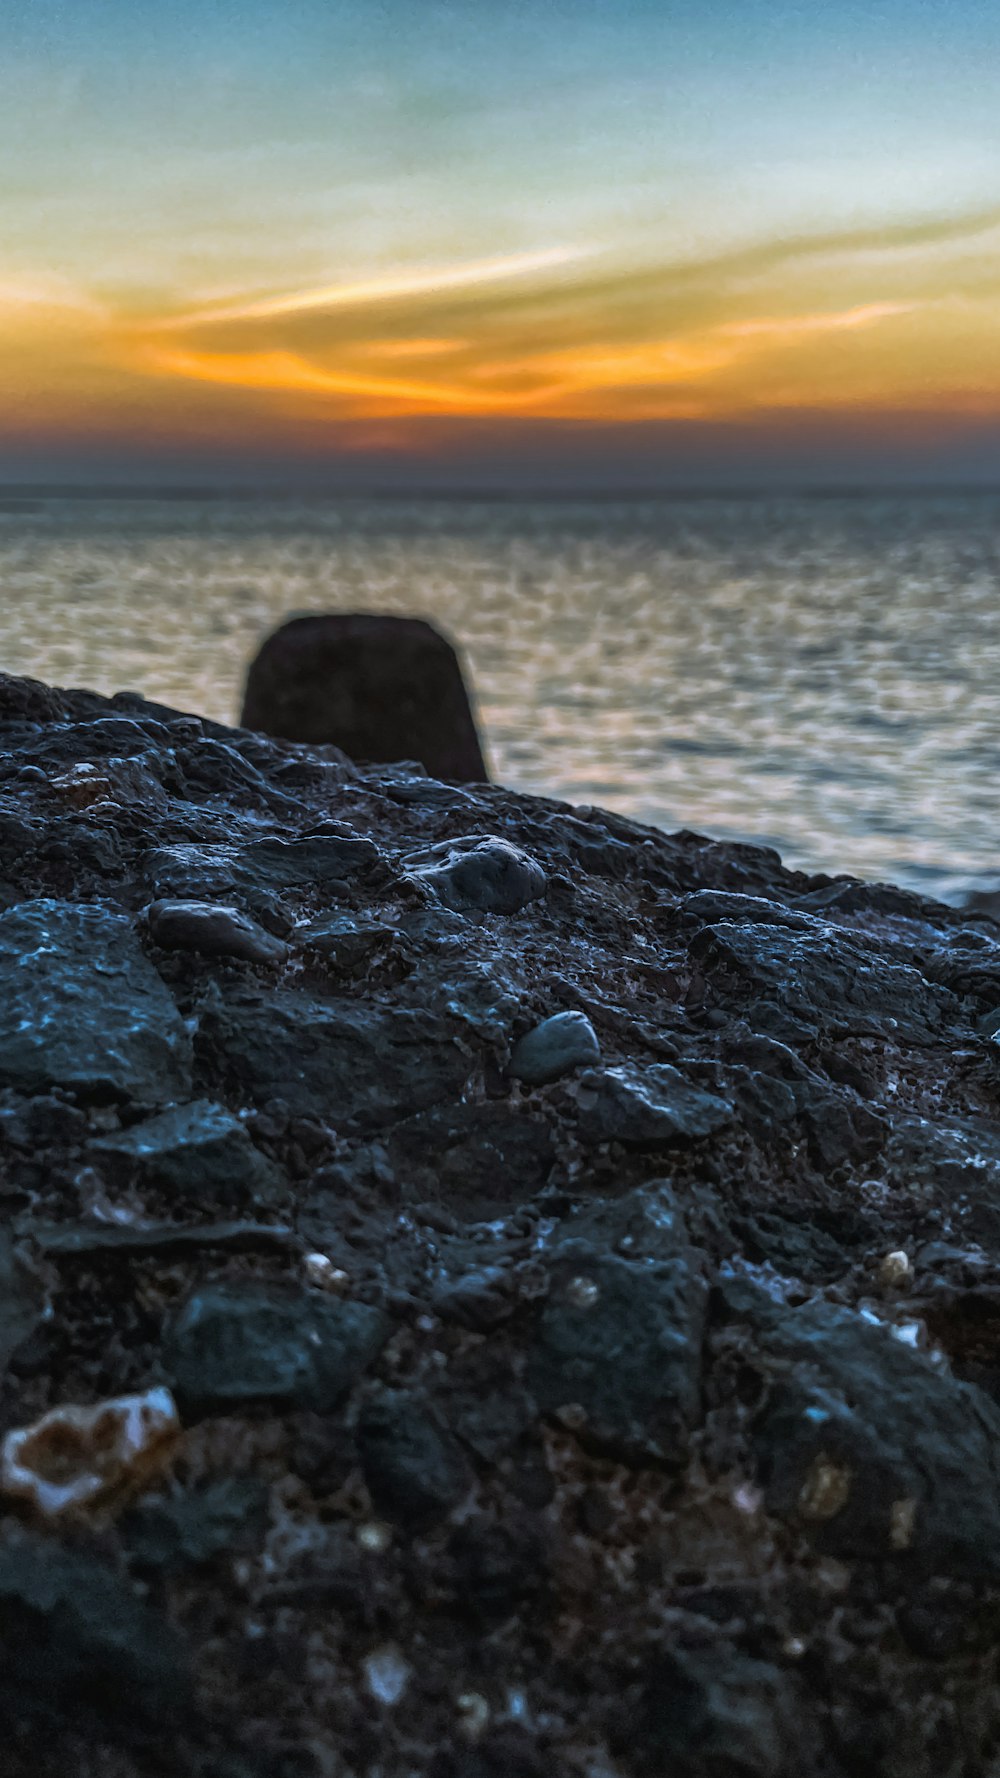 gray stone near sea during dawn